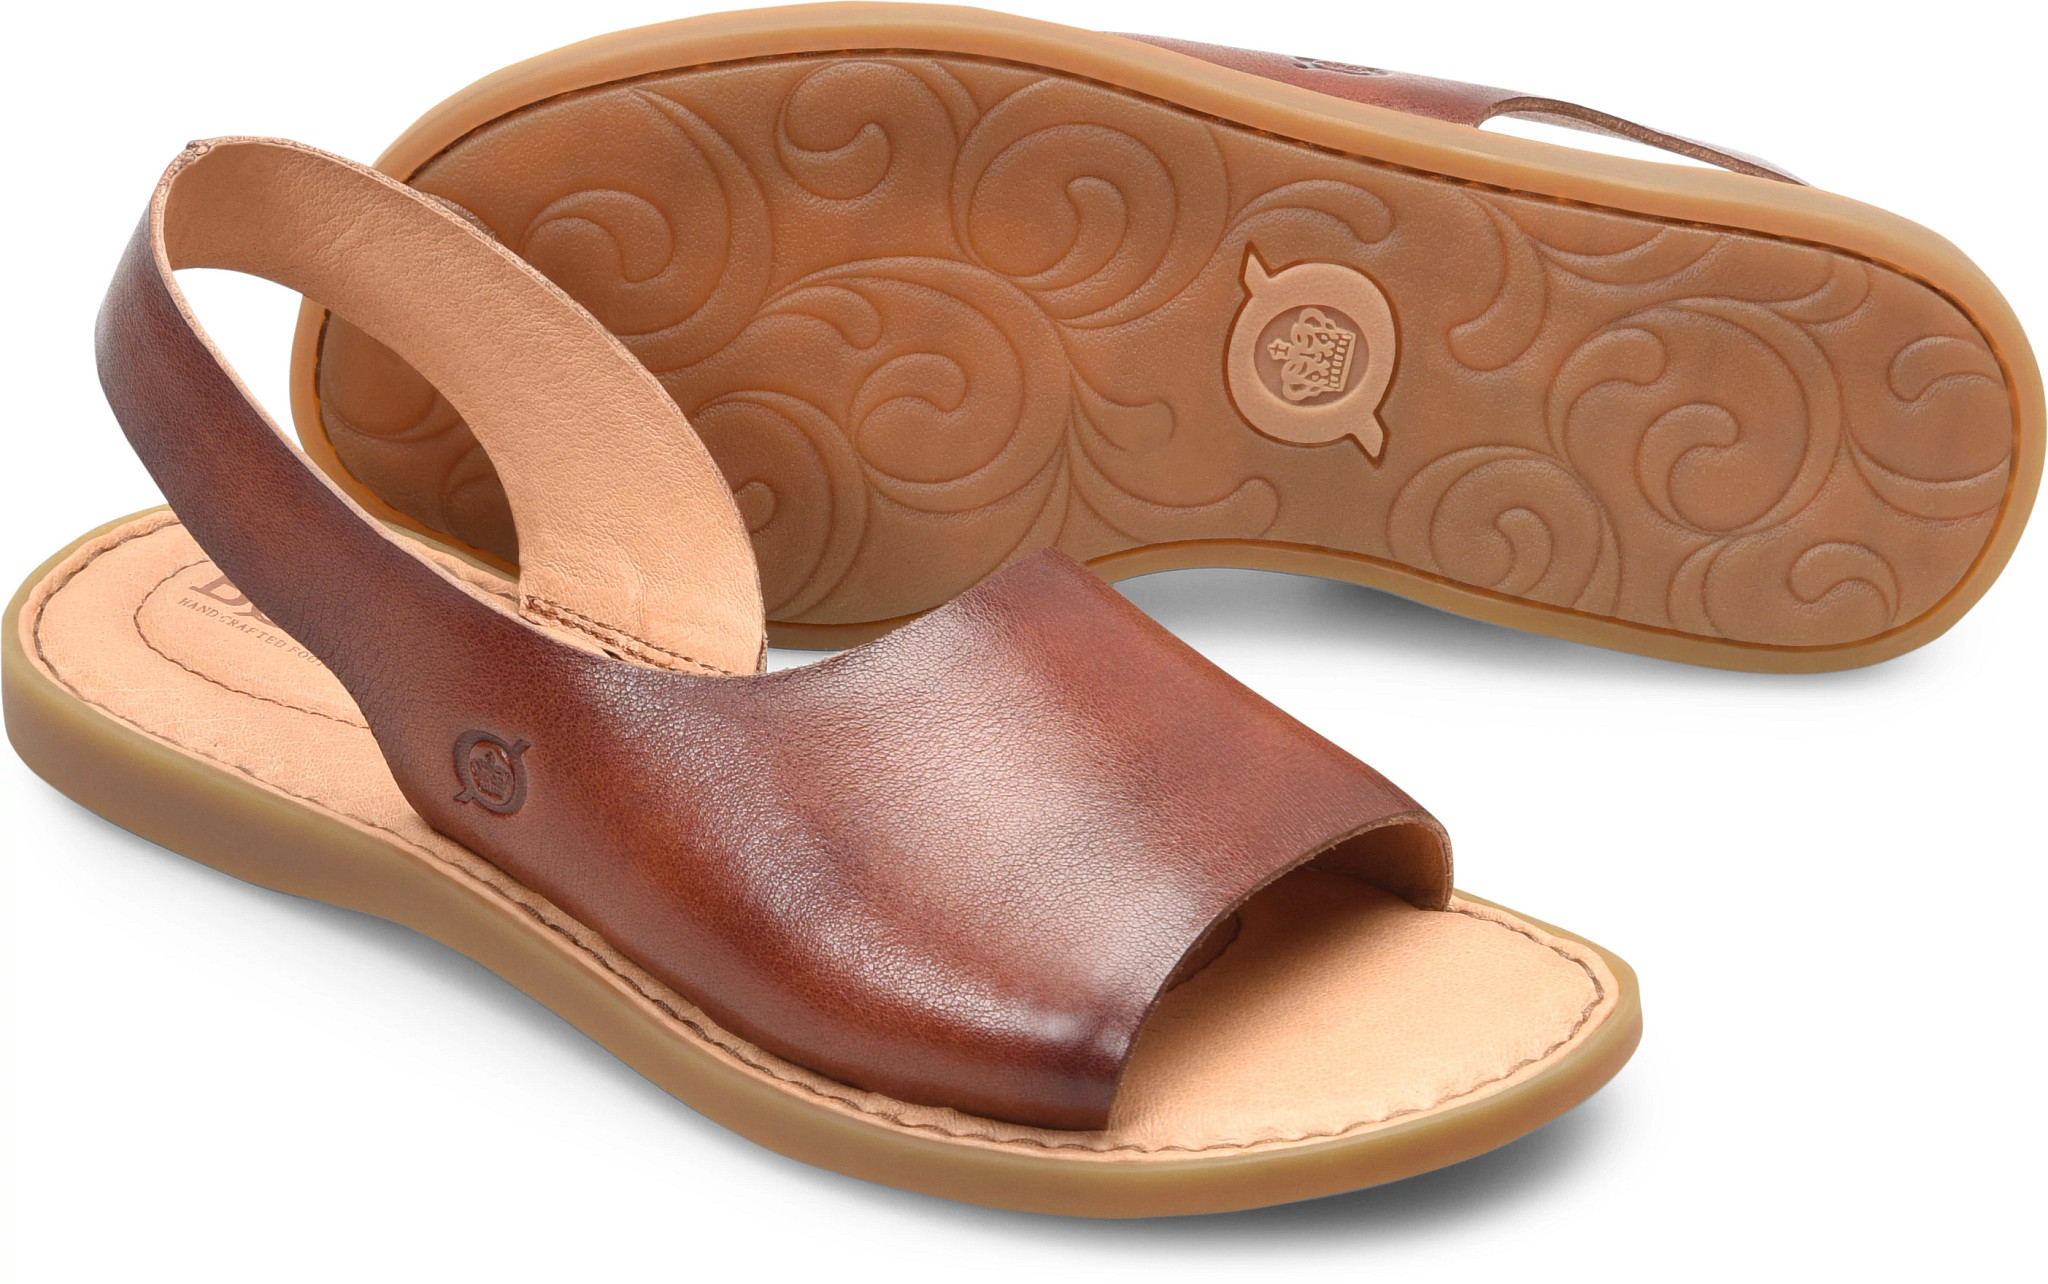 Discontinued Born Sandals Flash Sales - www.bridgepartnersllc.com 1696221052